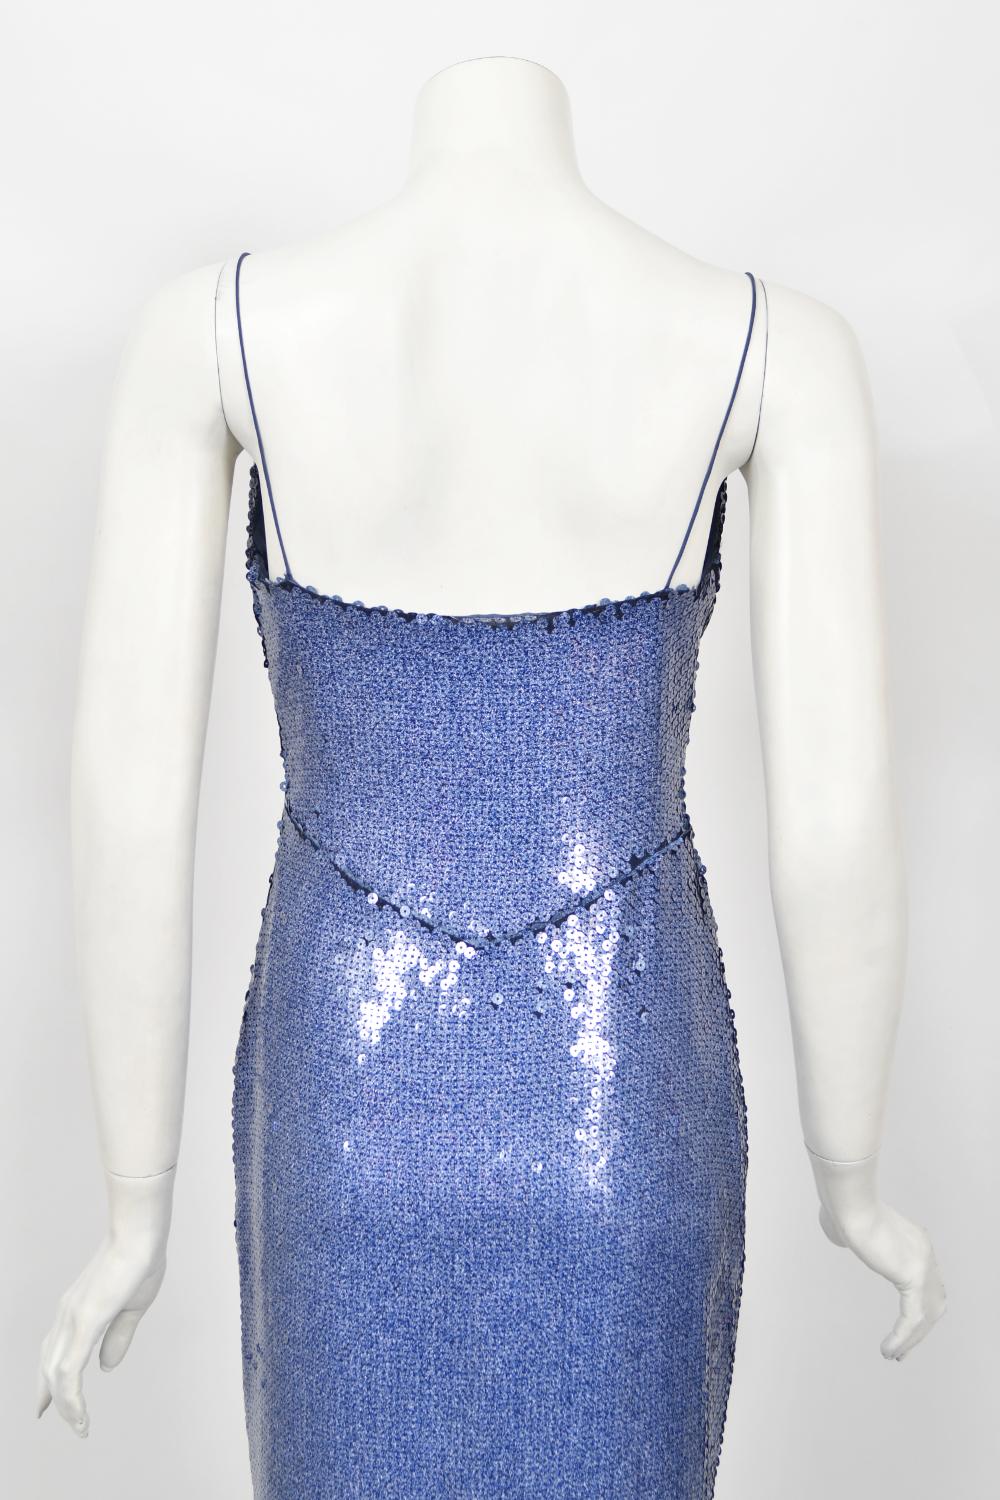 2000 Christian Dior by John Galliano Fully-Sequin Ocean Blue Bias-Cut Slip Gown  12